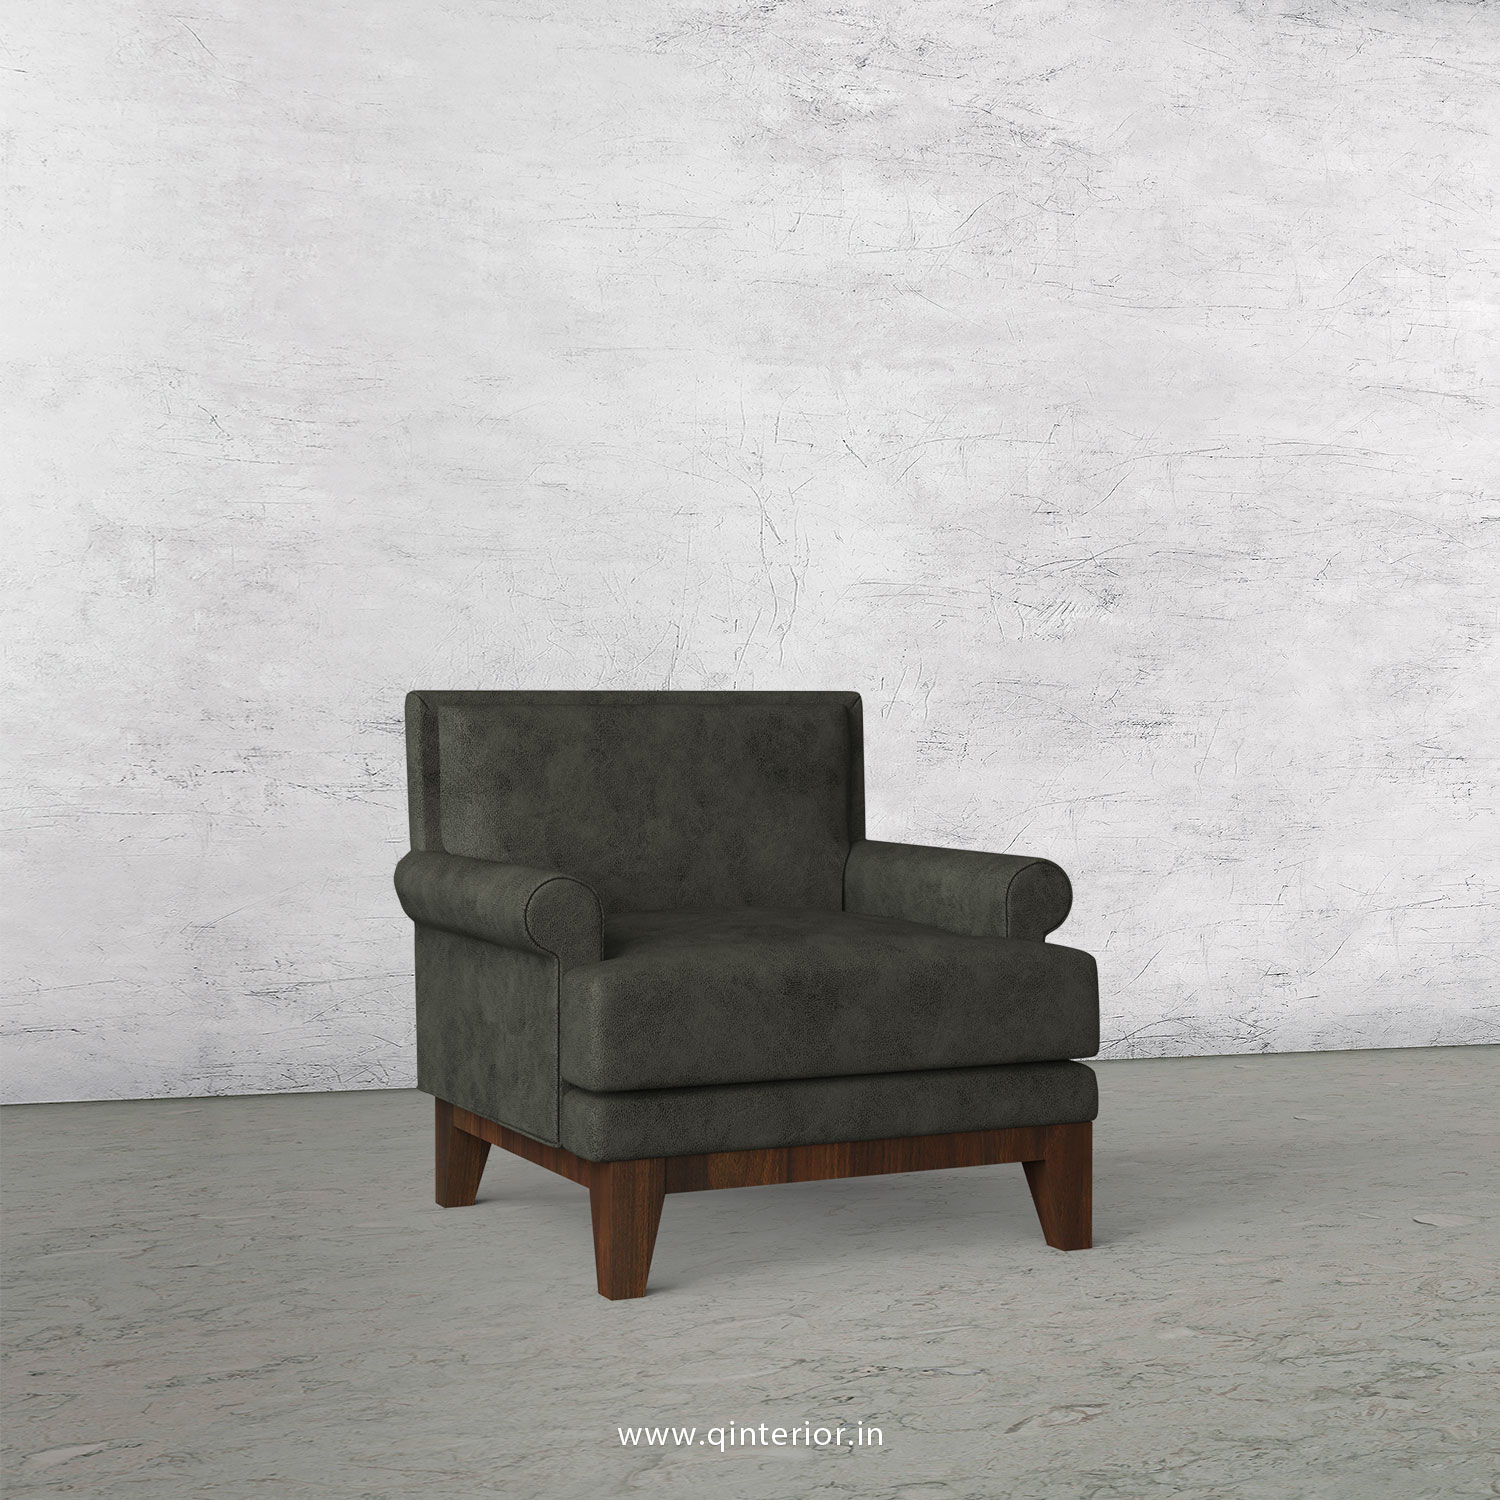 Aviana 1 Seater Sofa in Fab Leather Fabric - SFA001 FL07